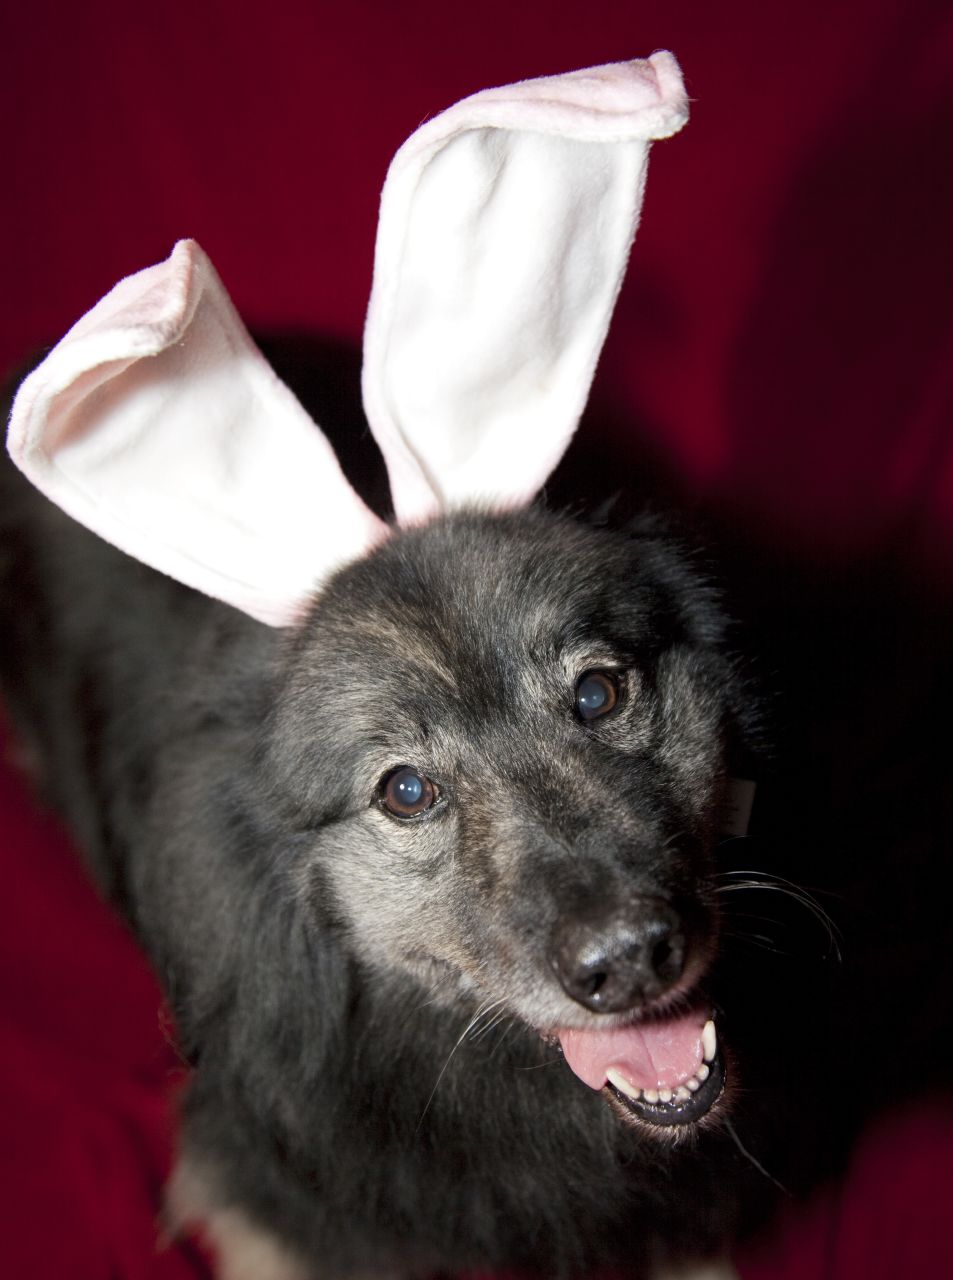 'Ears to a Hoppy Easter